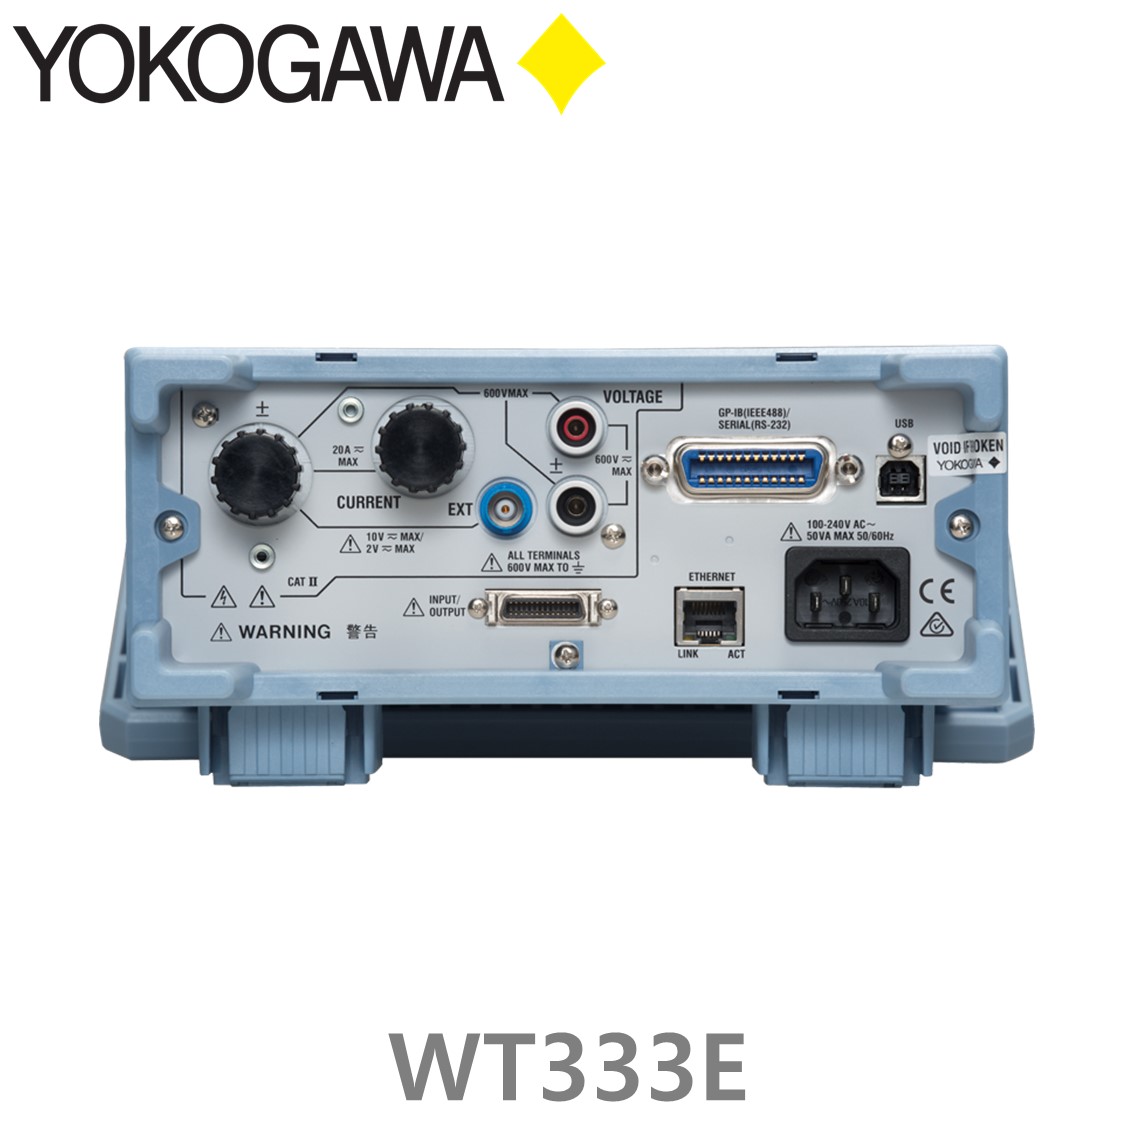 [ YOKOGAWA ] WT333E 요꼬가와 디지탈 파워미터